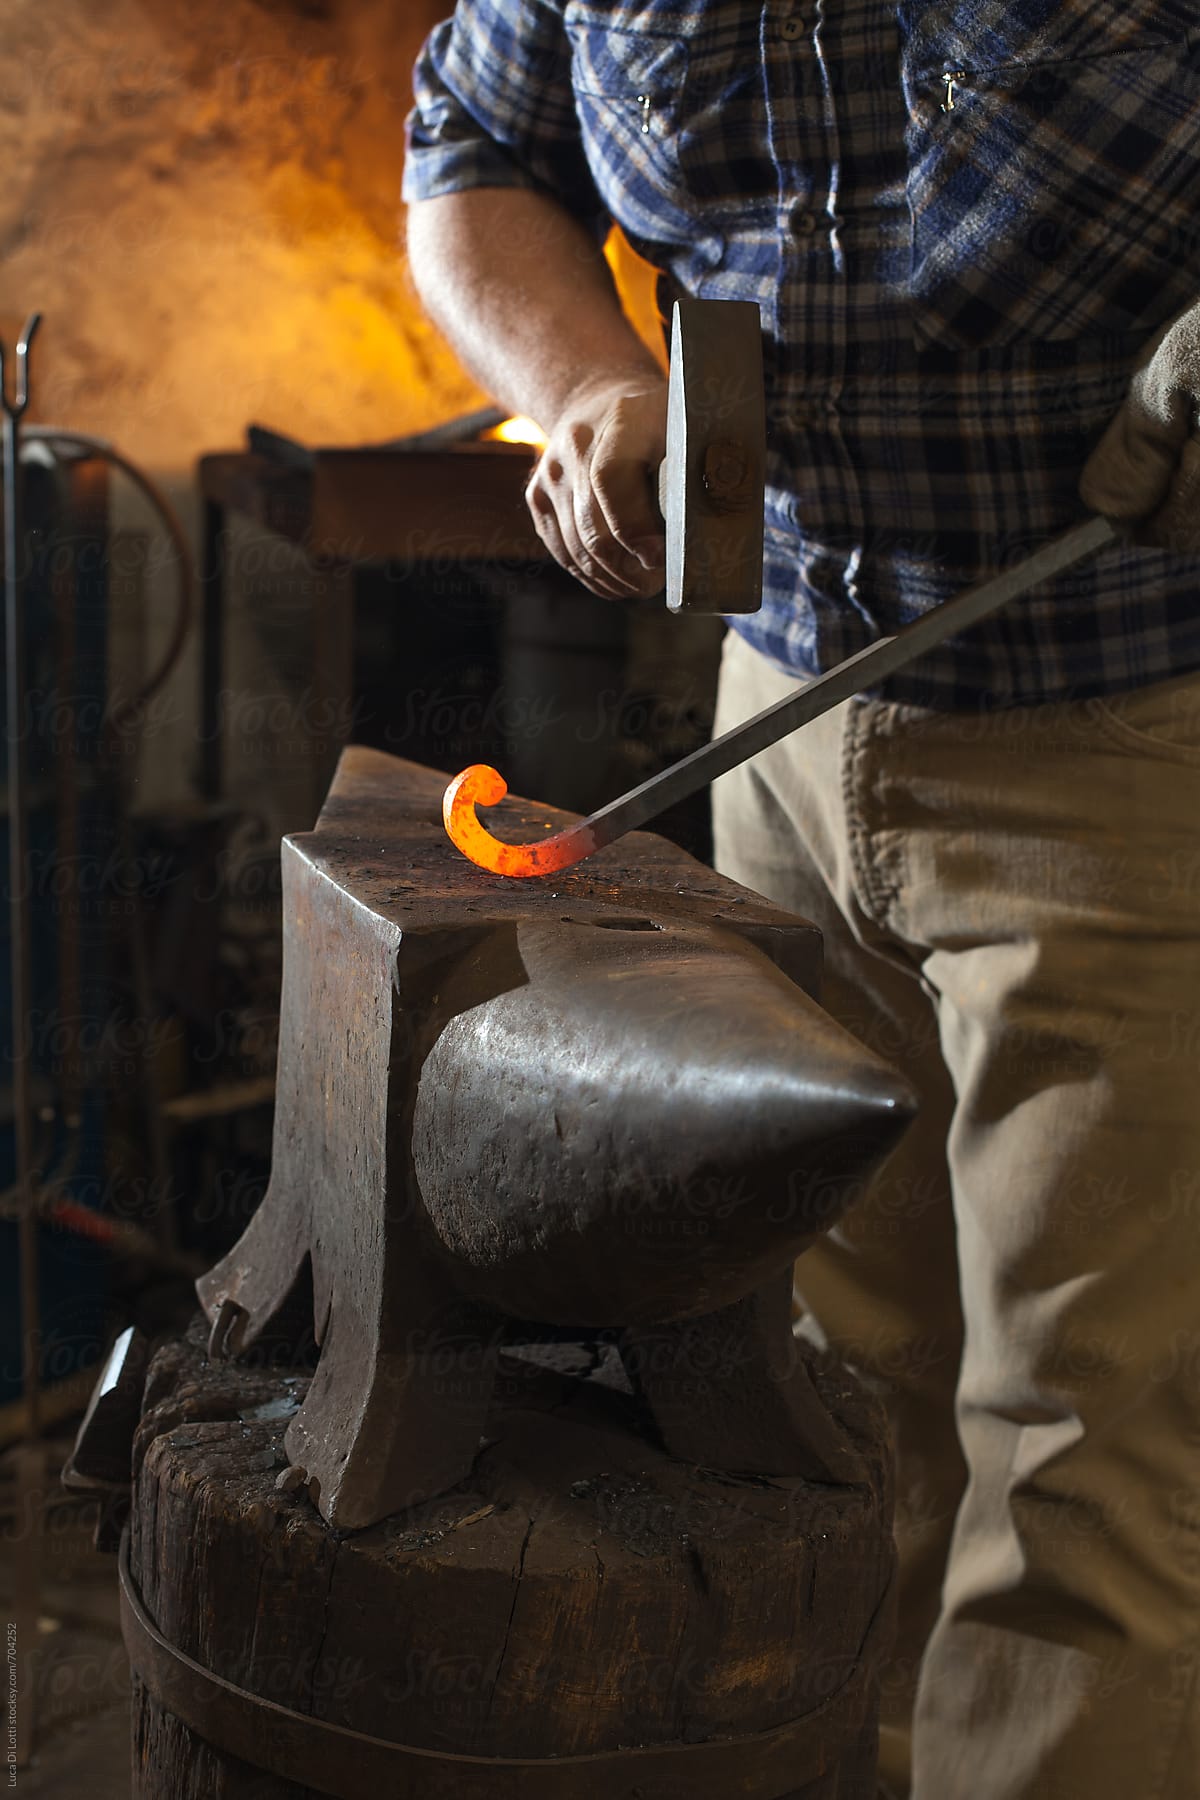 Blacksmith hammering a red-hot iron rod